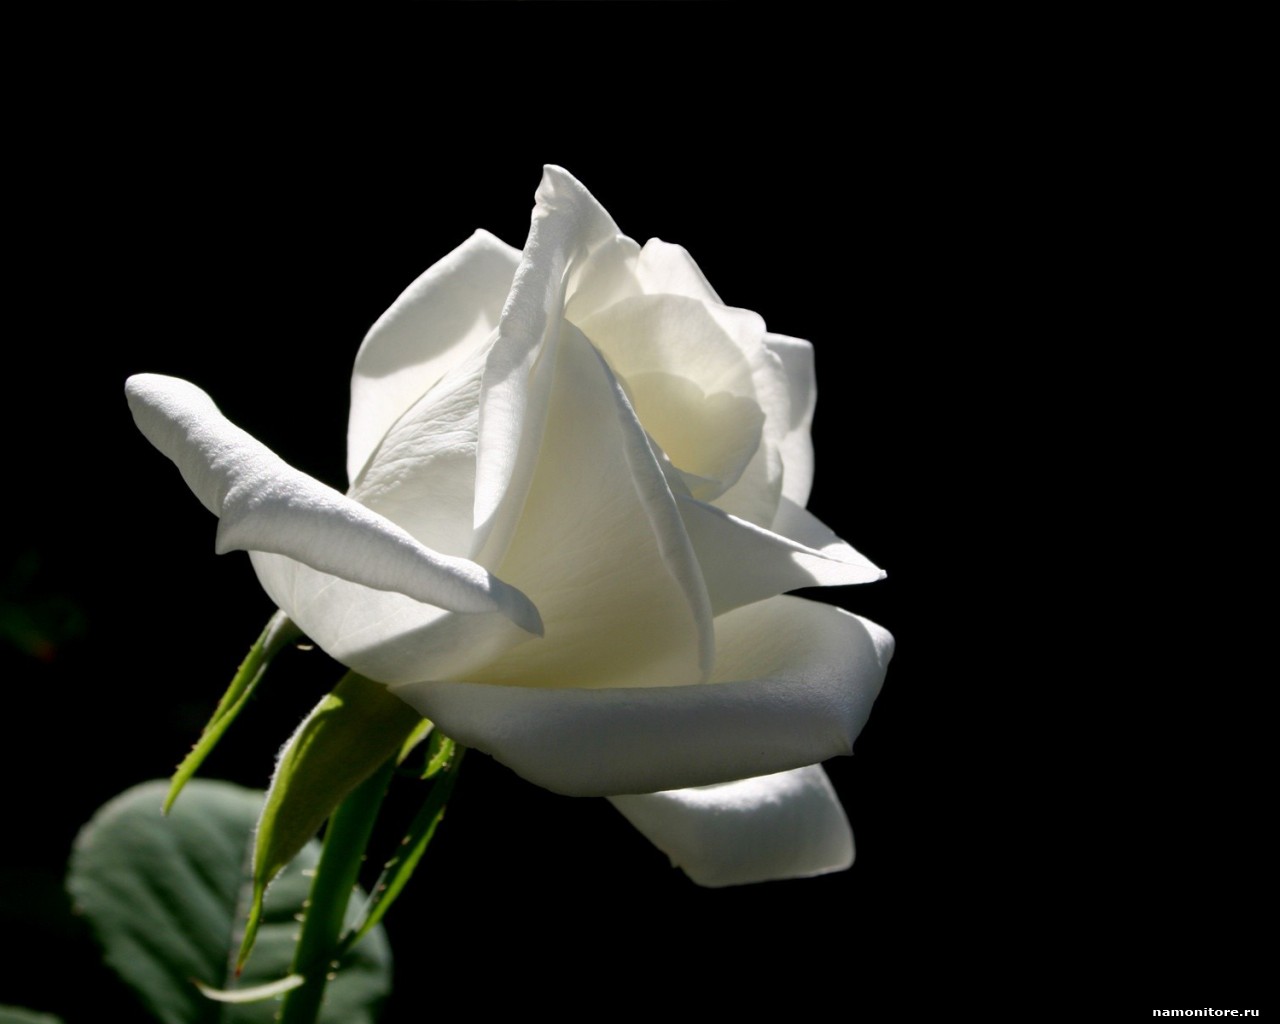 The White rose on a black background black flowers roses white